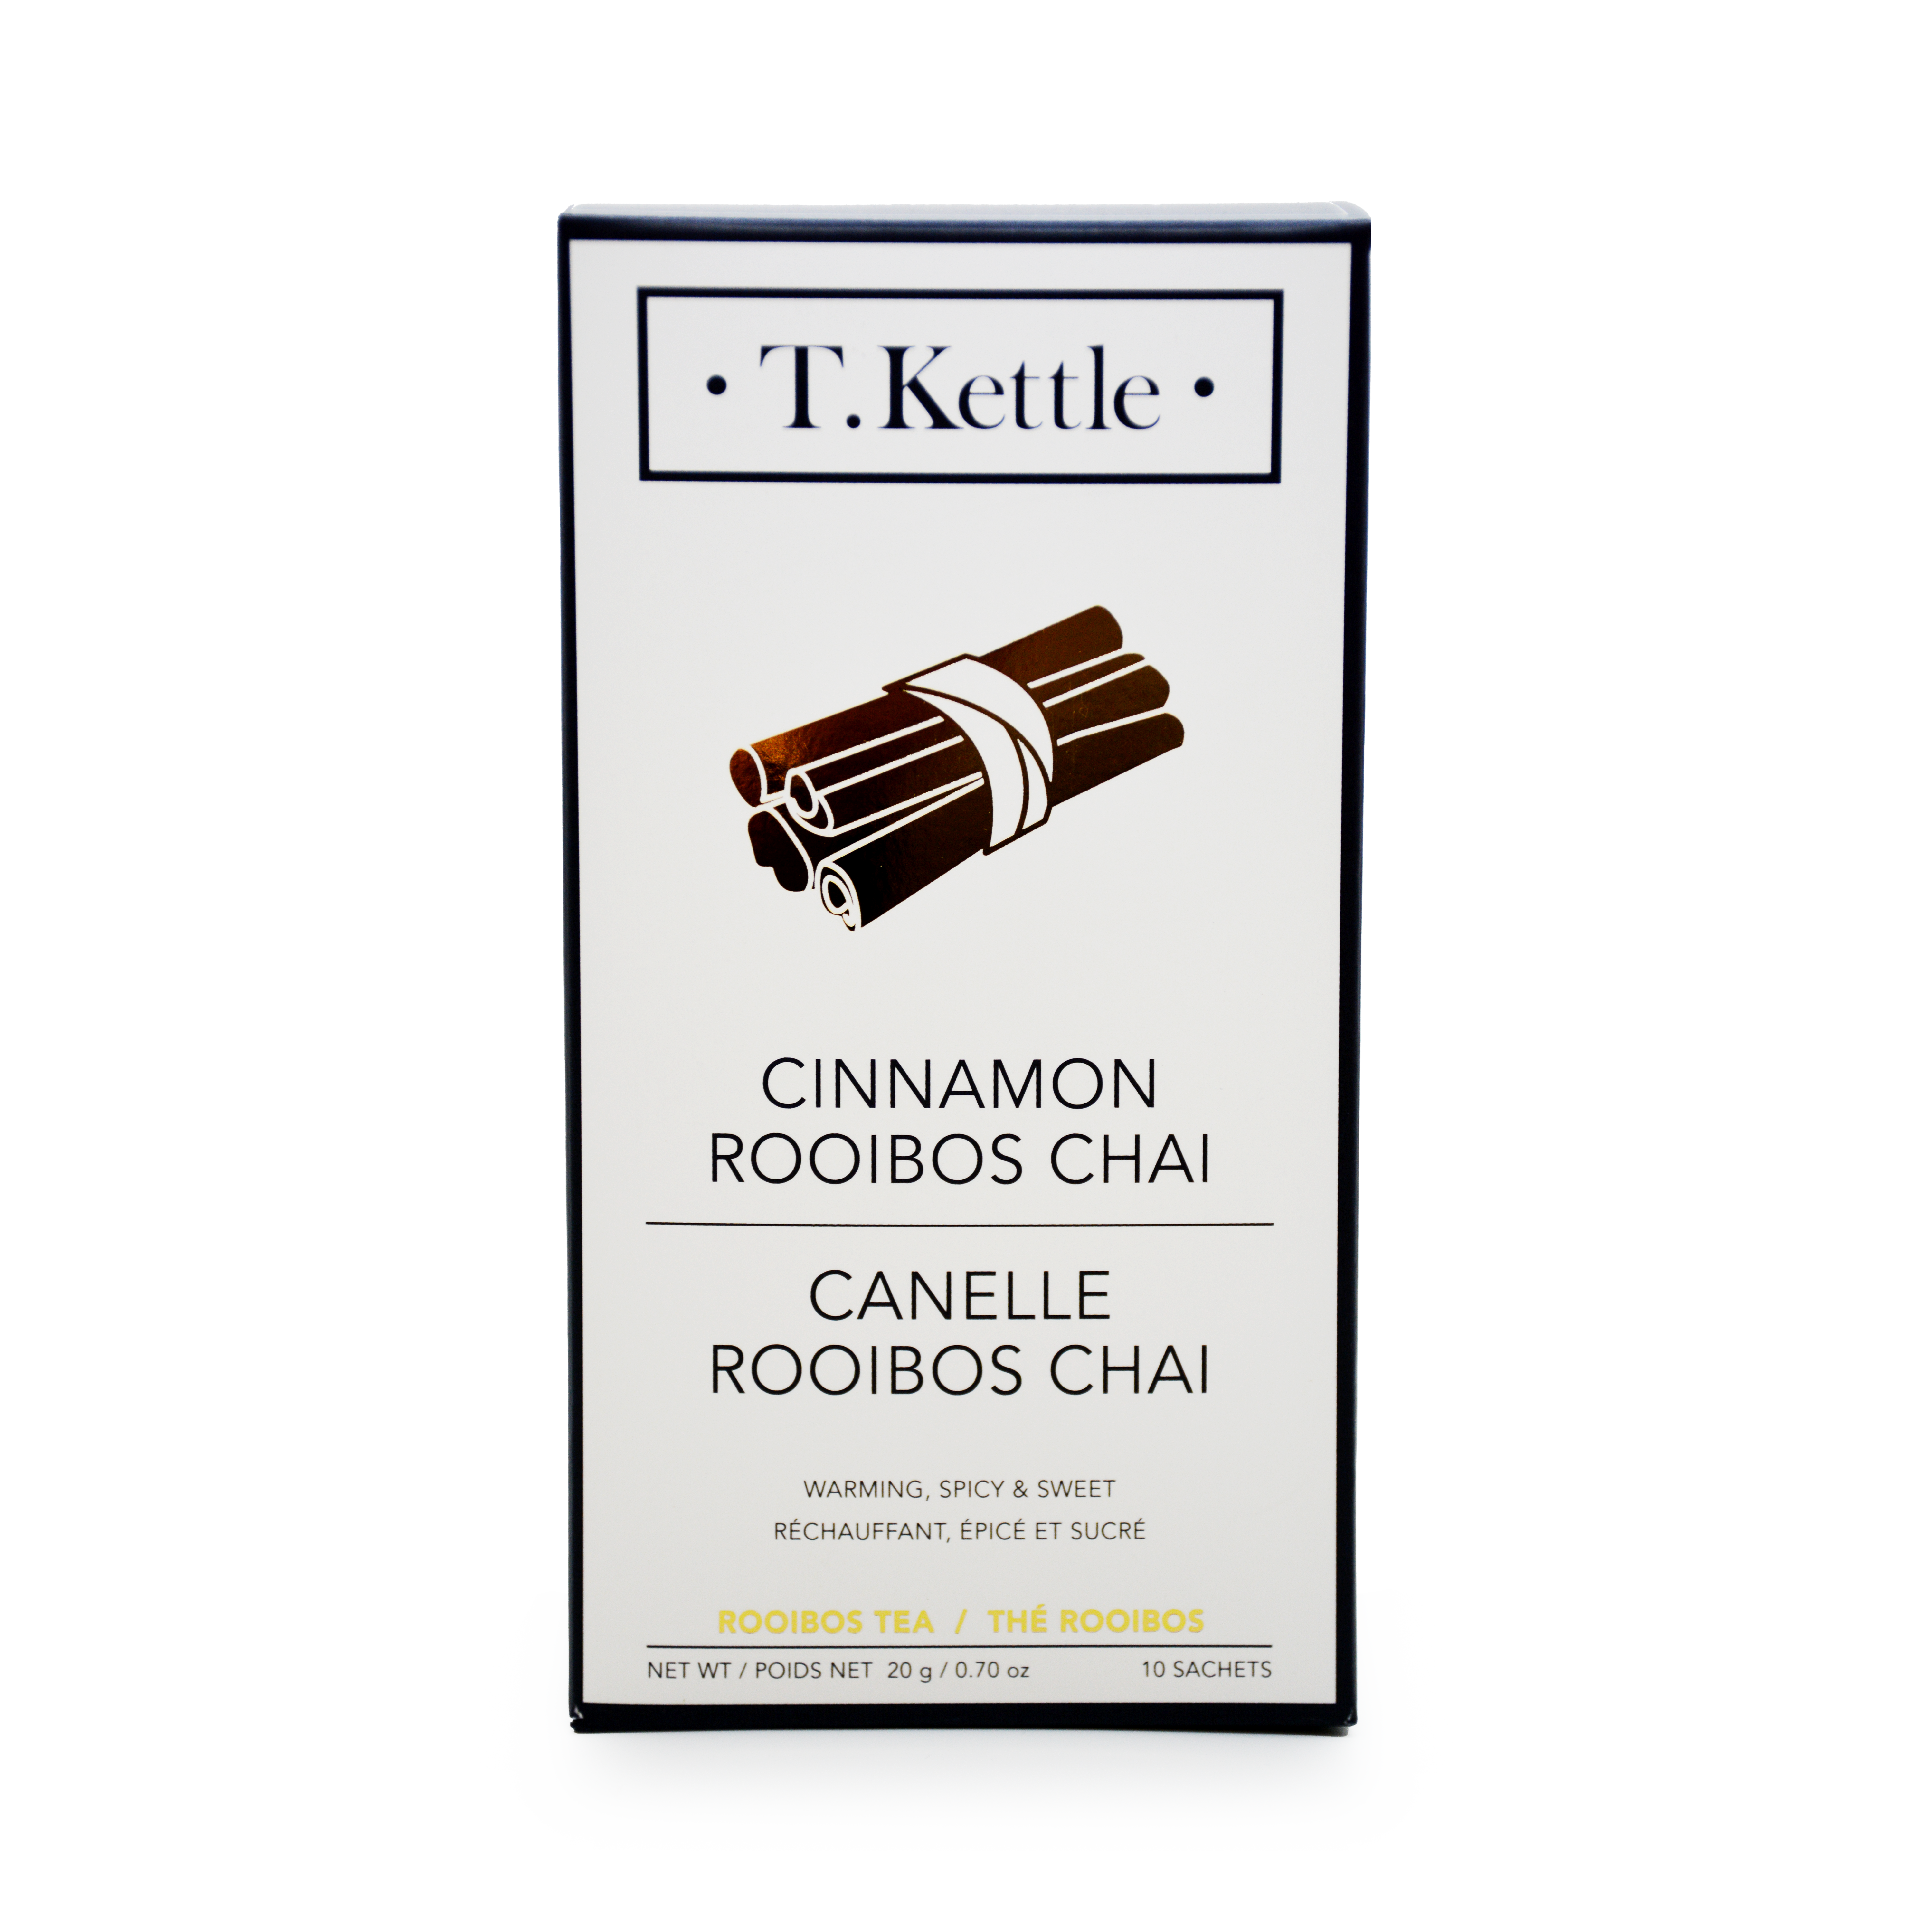 Cinnamon Rooibos Chai – Box of 10